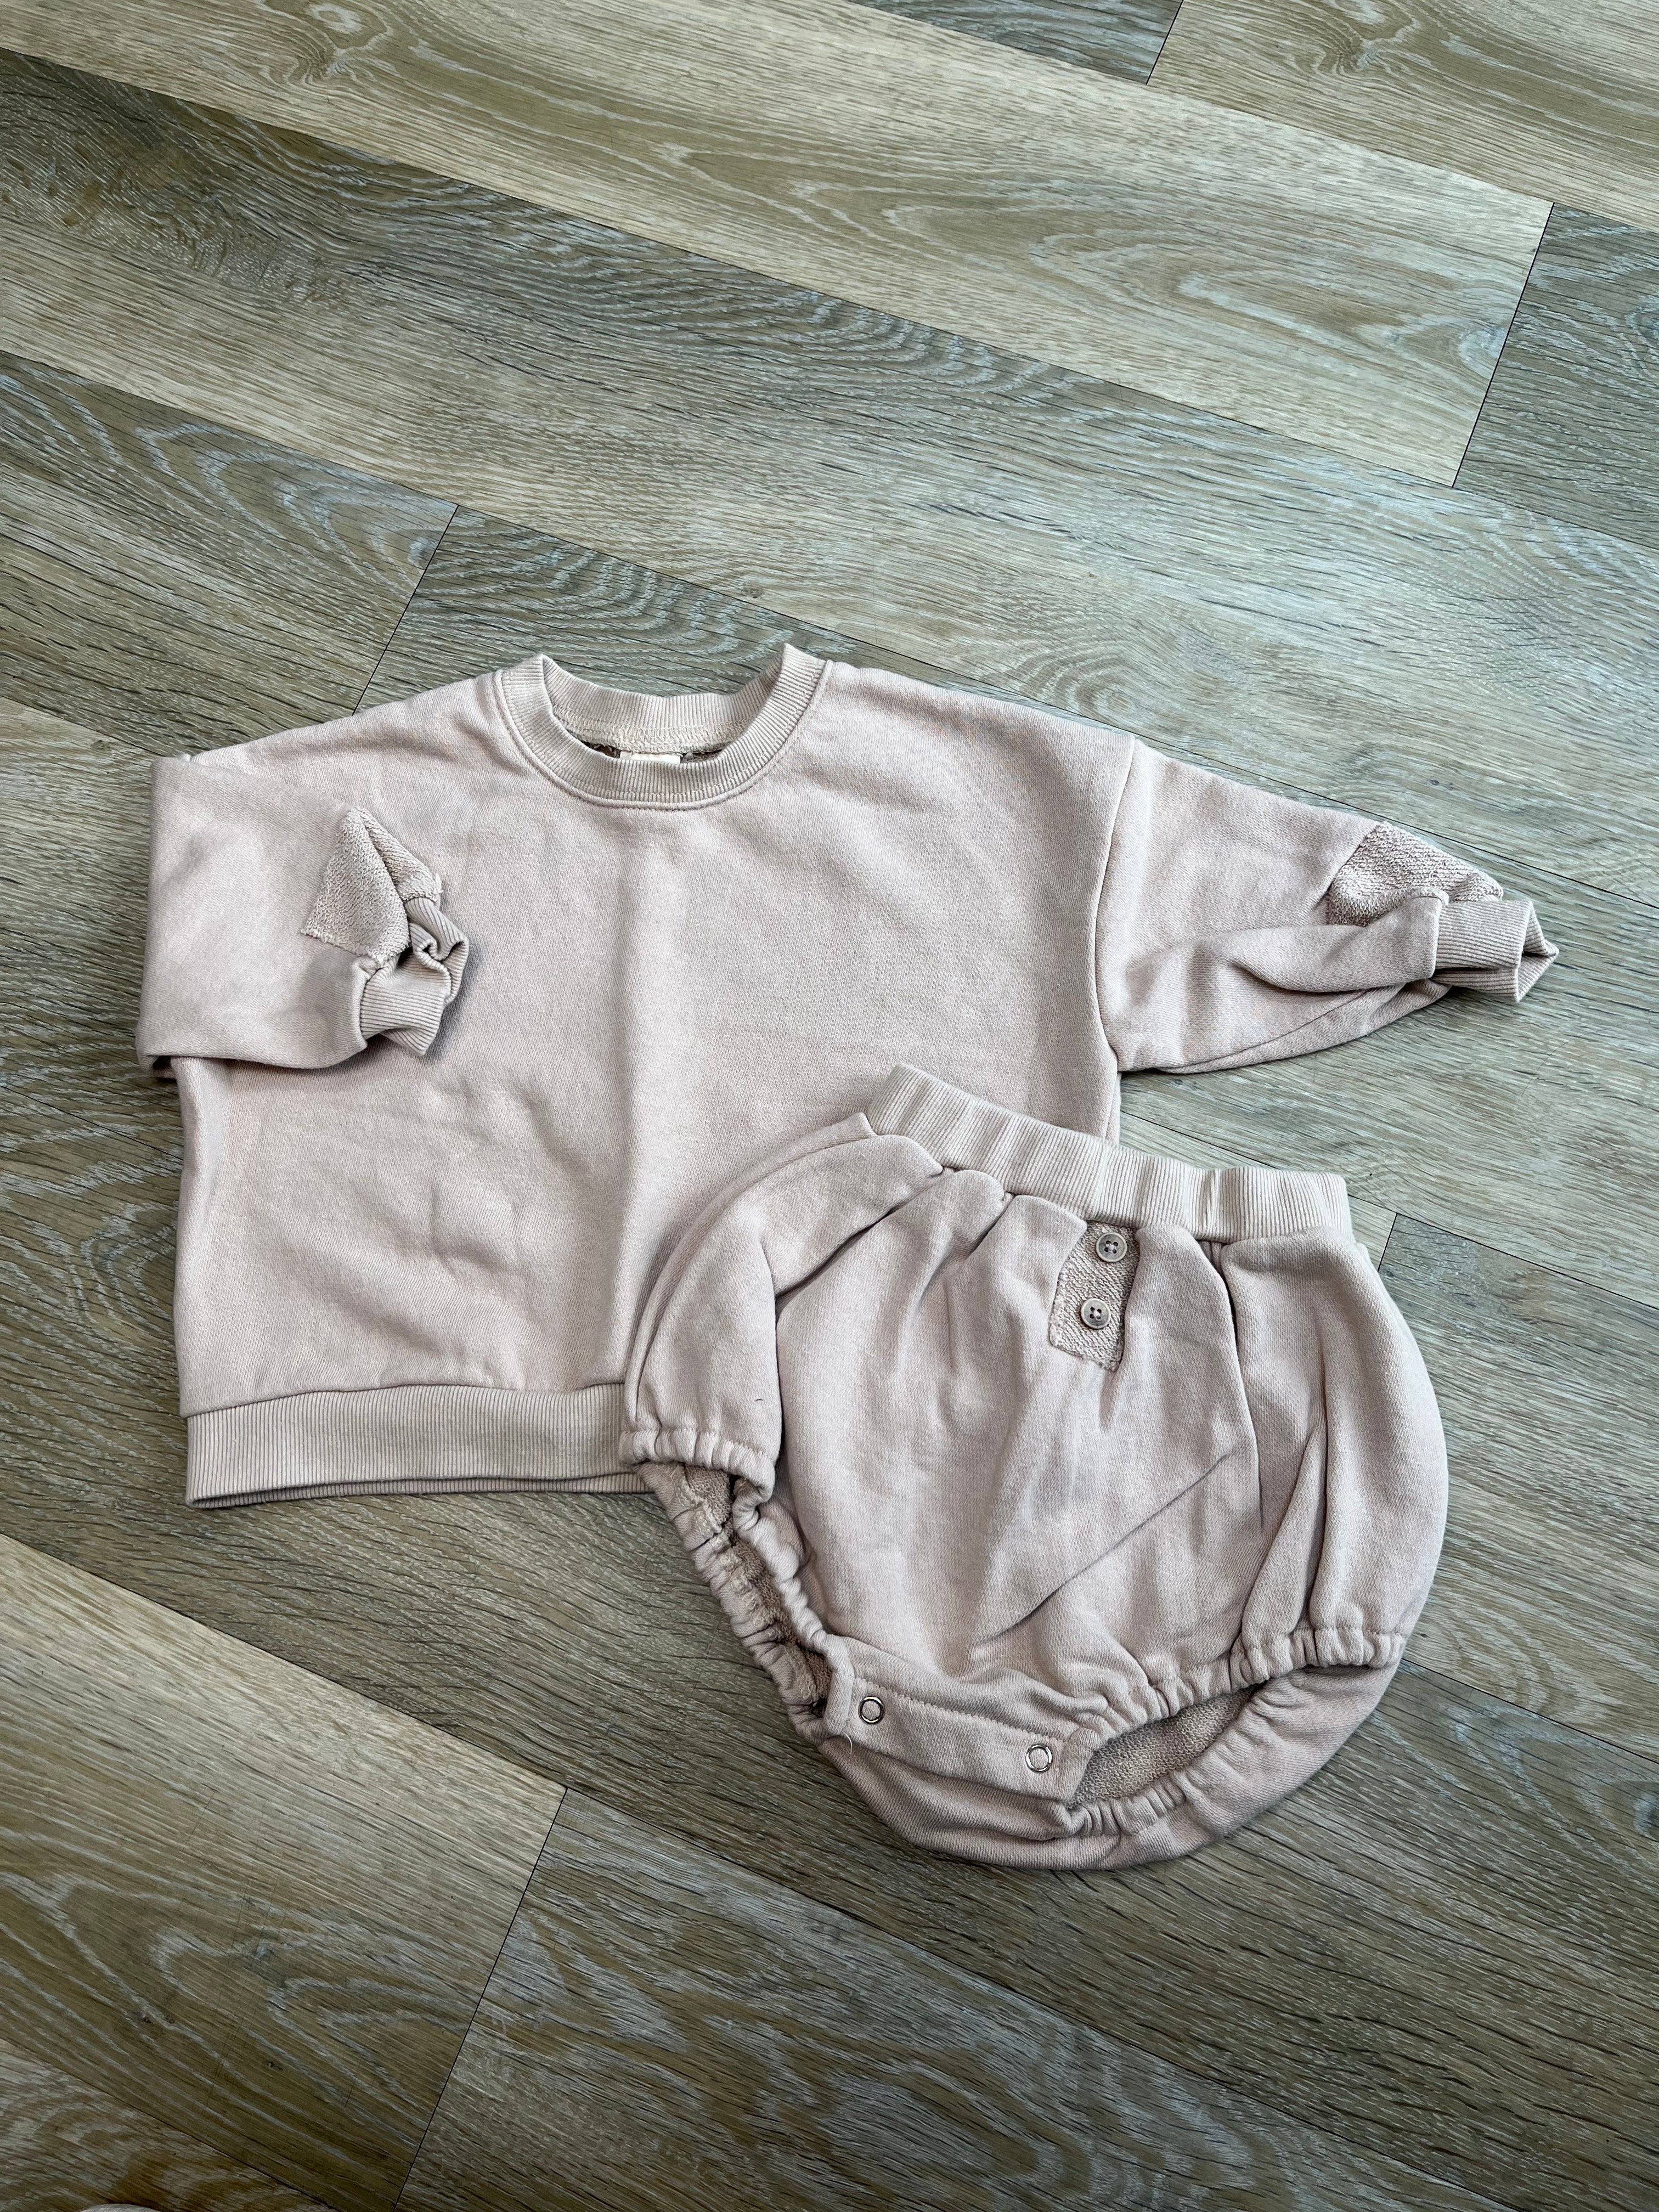 Sweatshirt and Pant Set